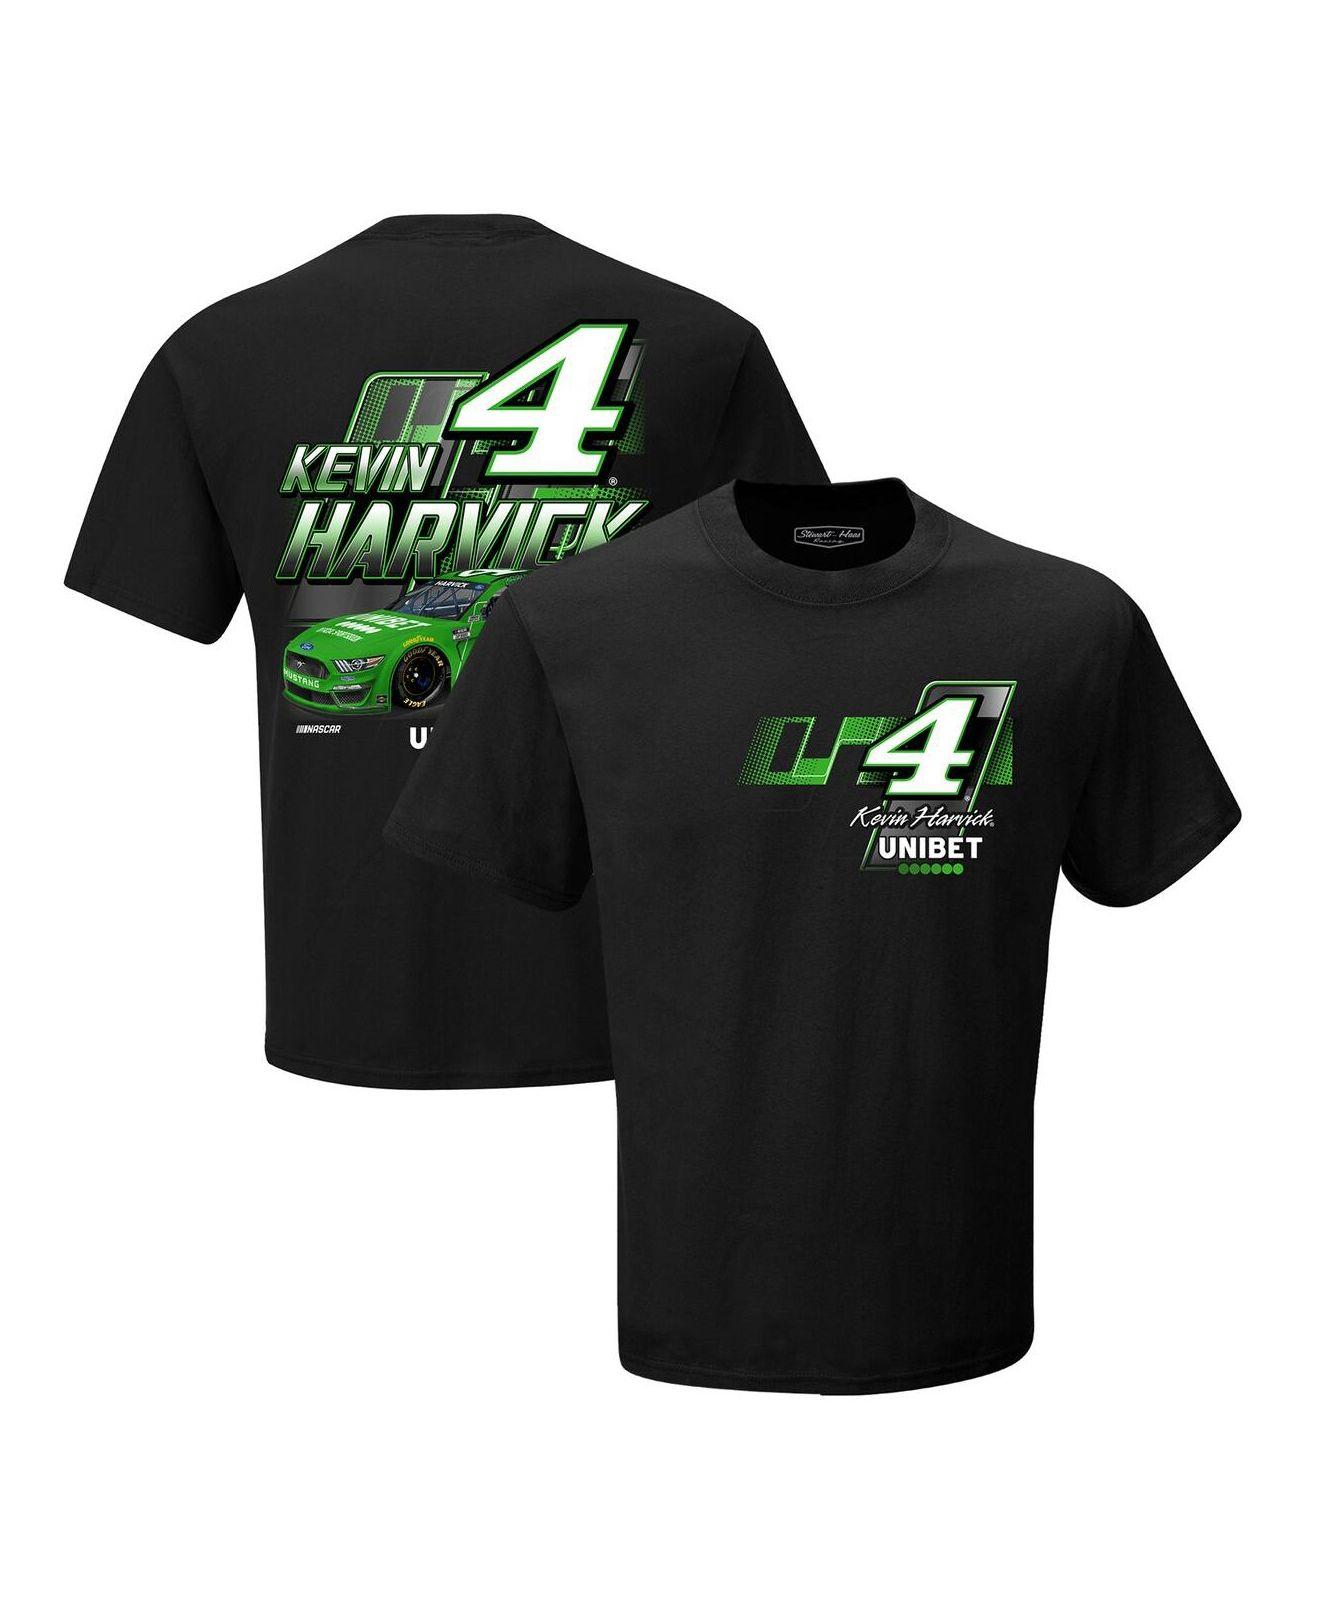 STEWART-HAAS RACING Black Kevin Harvick Unibet Graphic 2-spot T-shirt ...